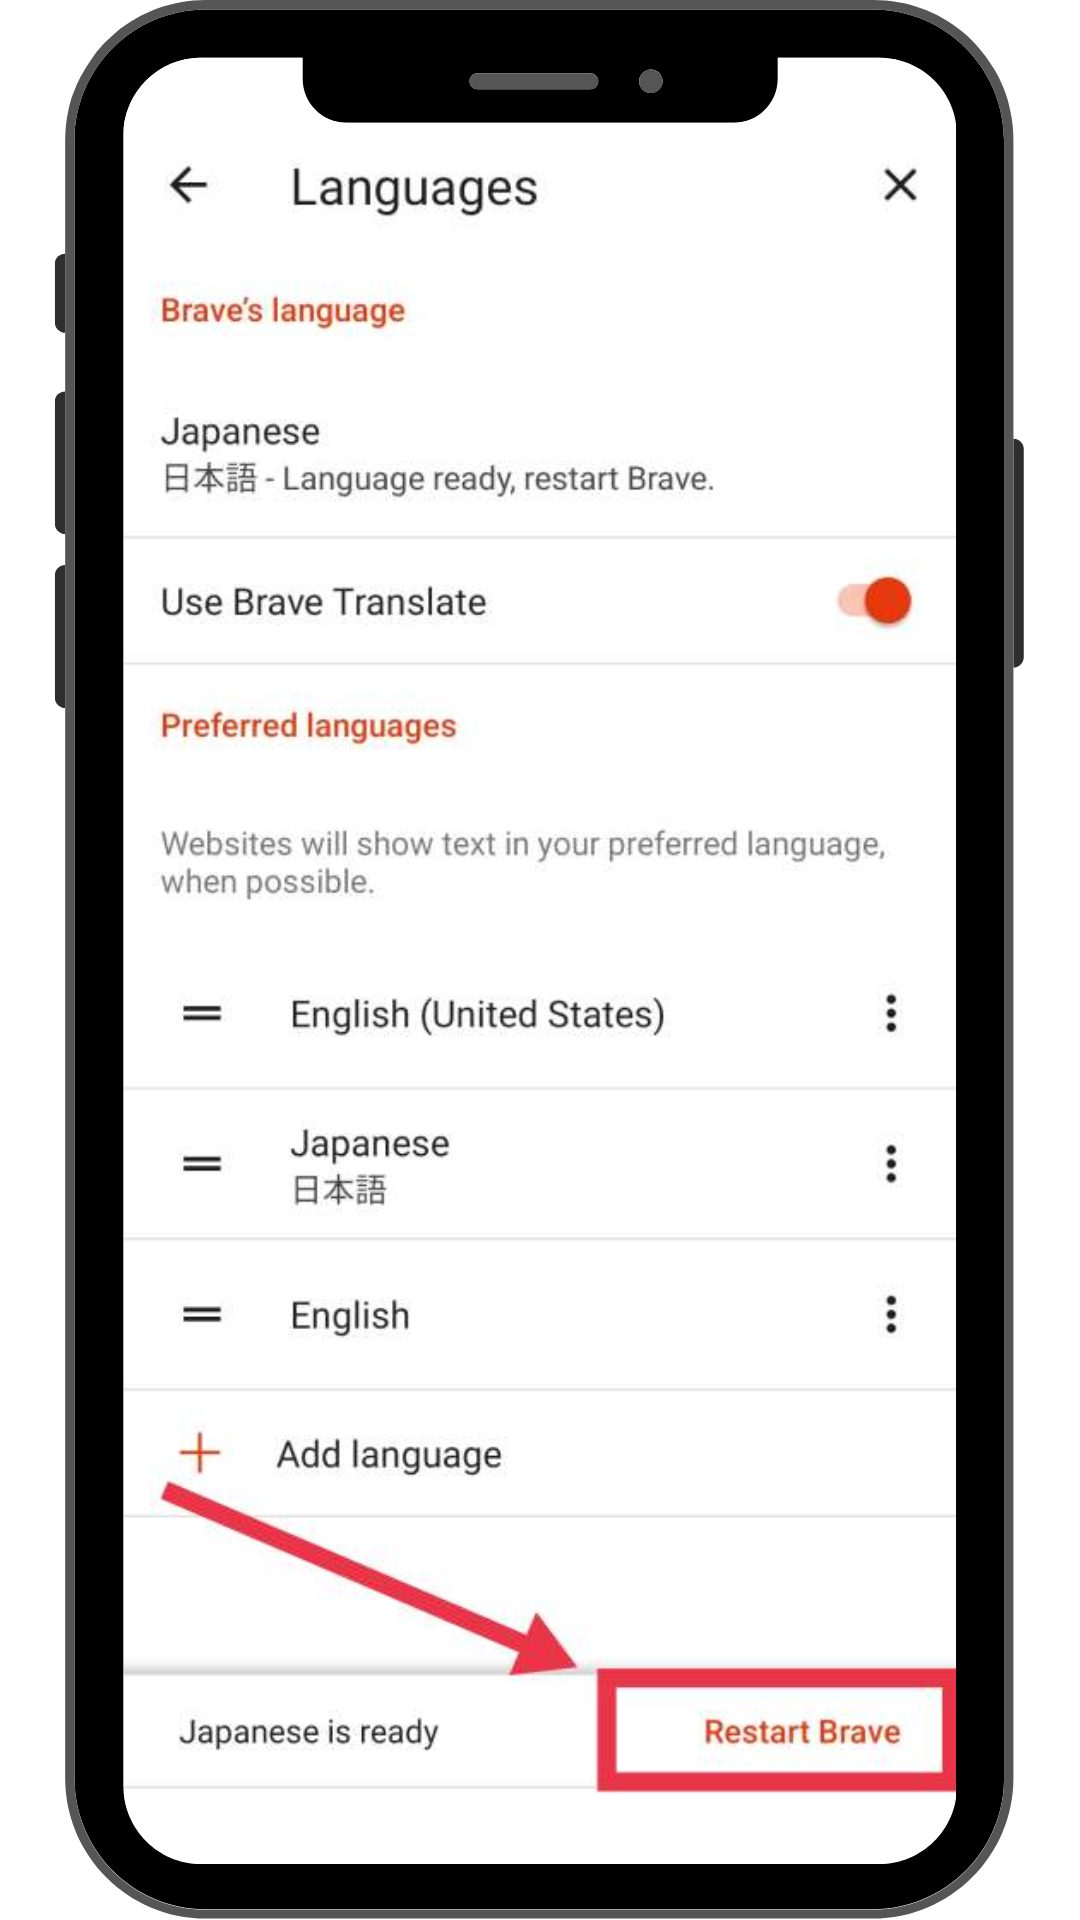 Braveブラウザ Android版 日本語に翻訳する方法5